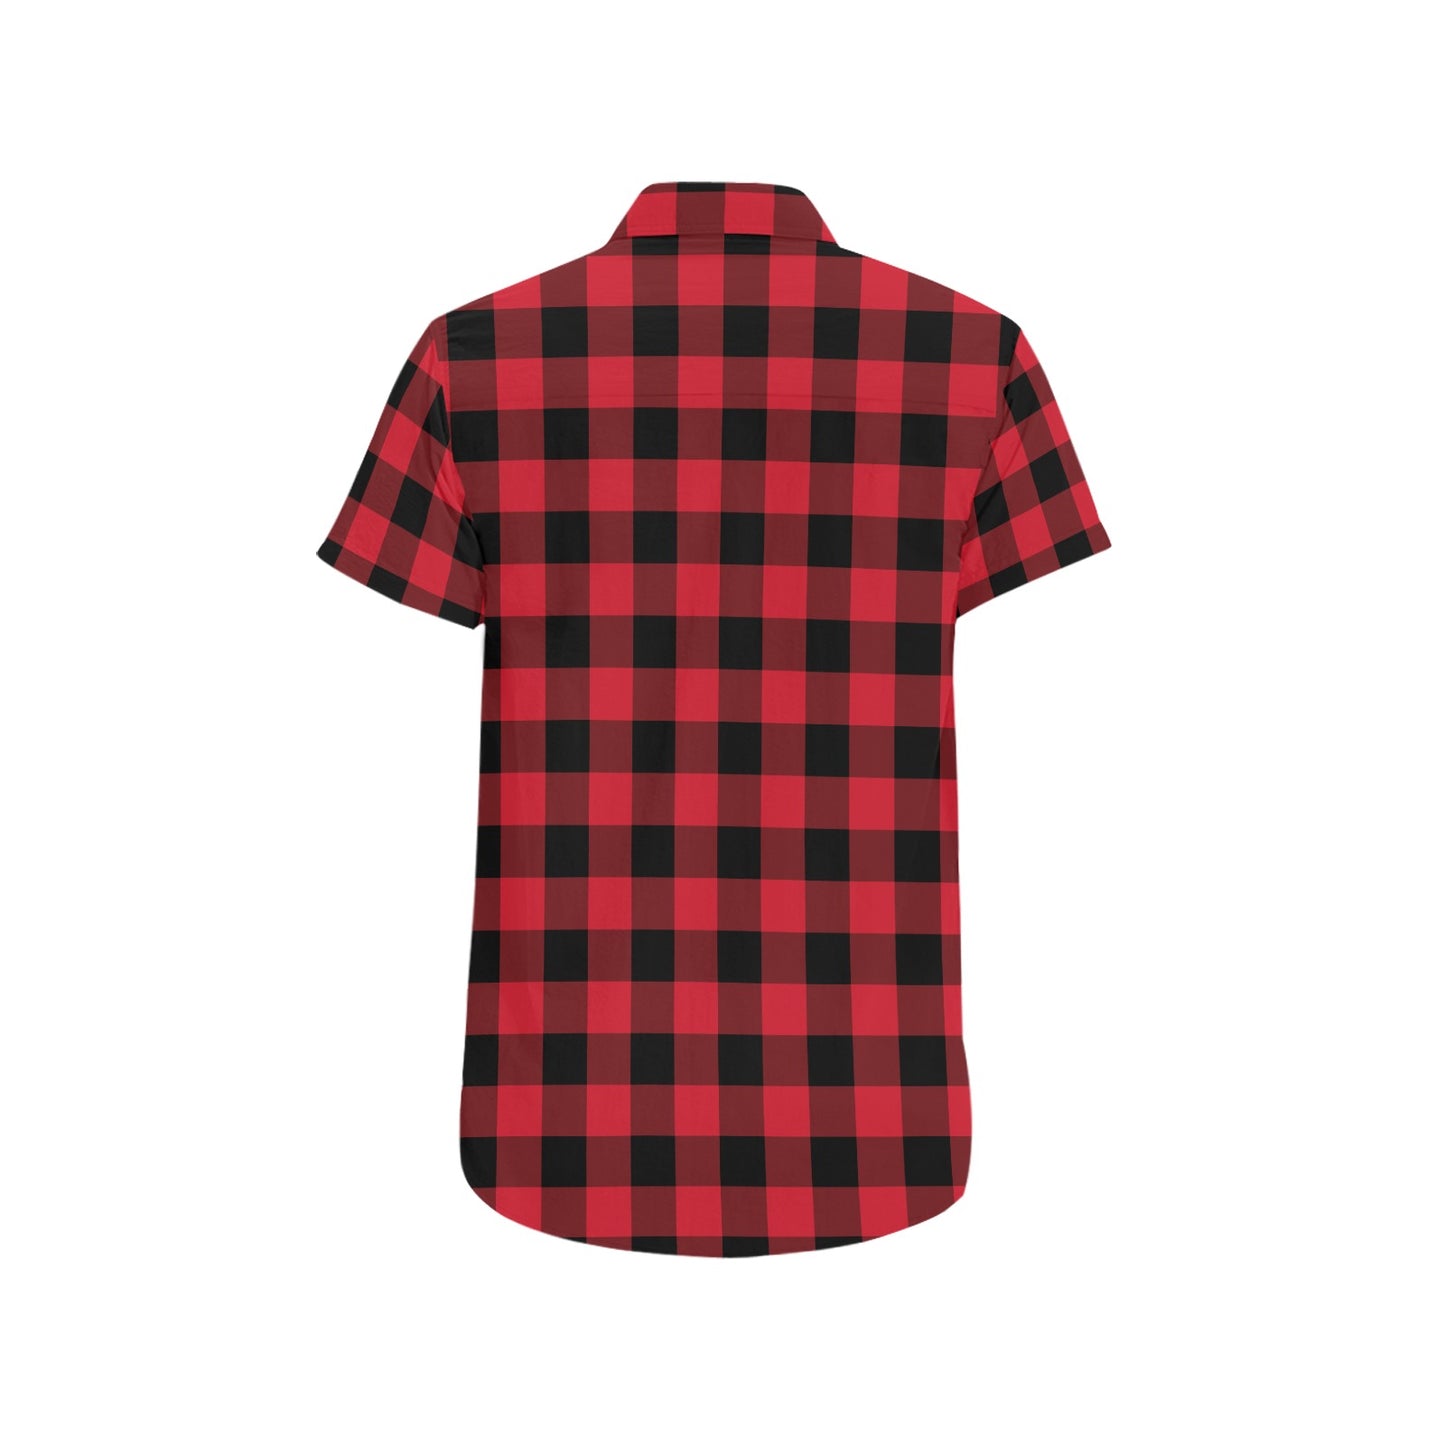 Red Buffalo Plaid Short Sleeve Men Button Up Shirt, Black Check Checkered Print Casual Buttoned Down Collared Summer Dress Designer Shirt